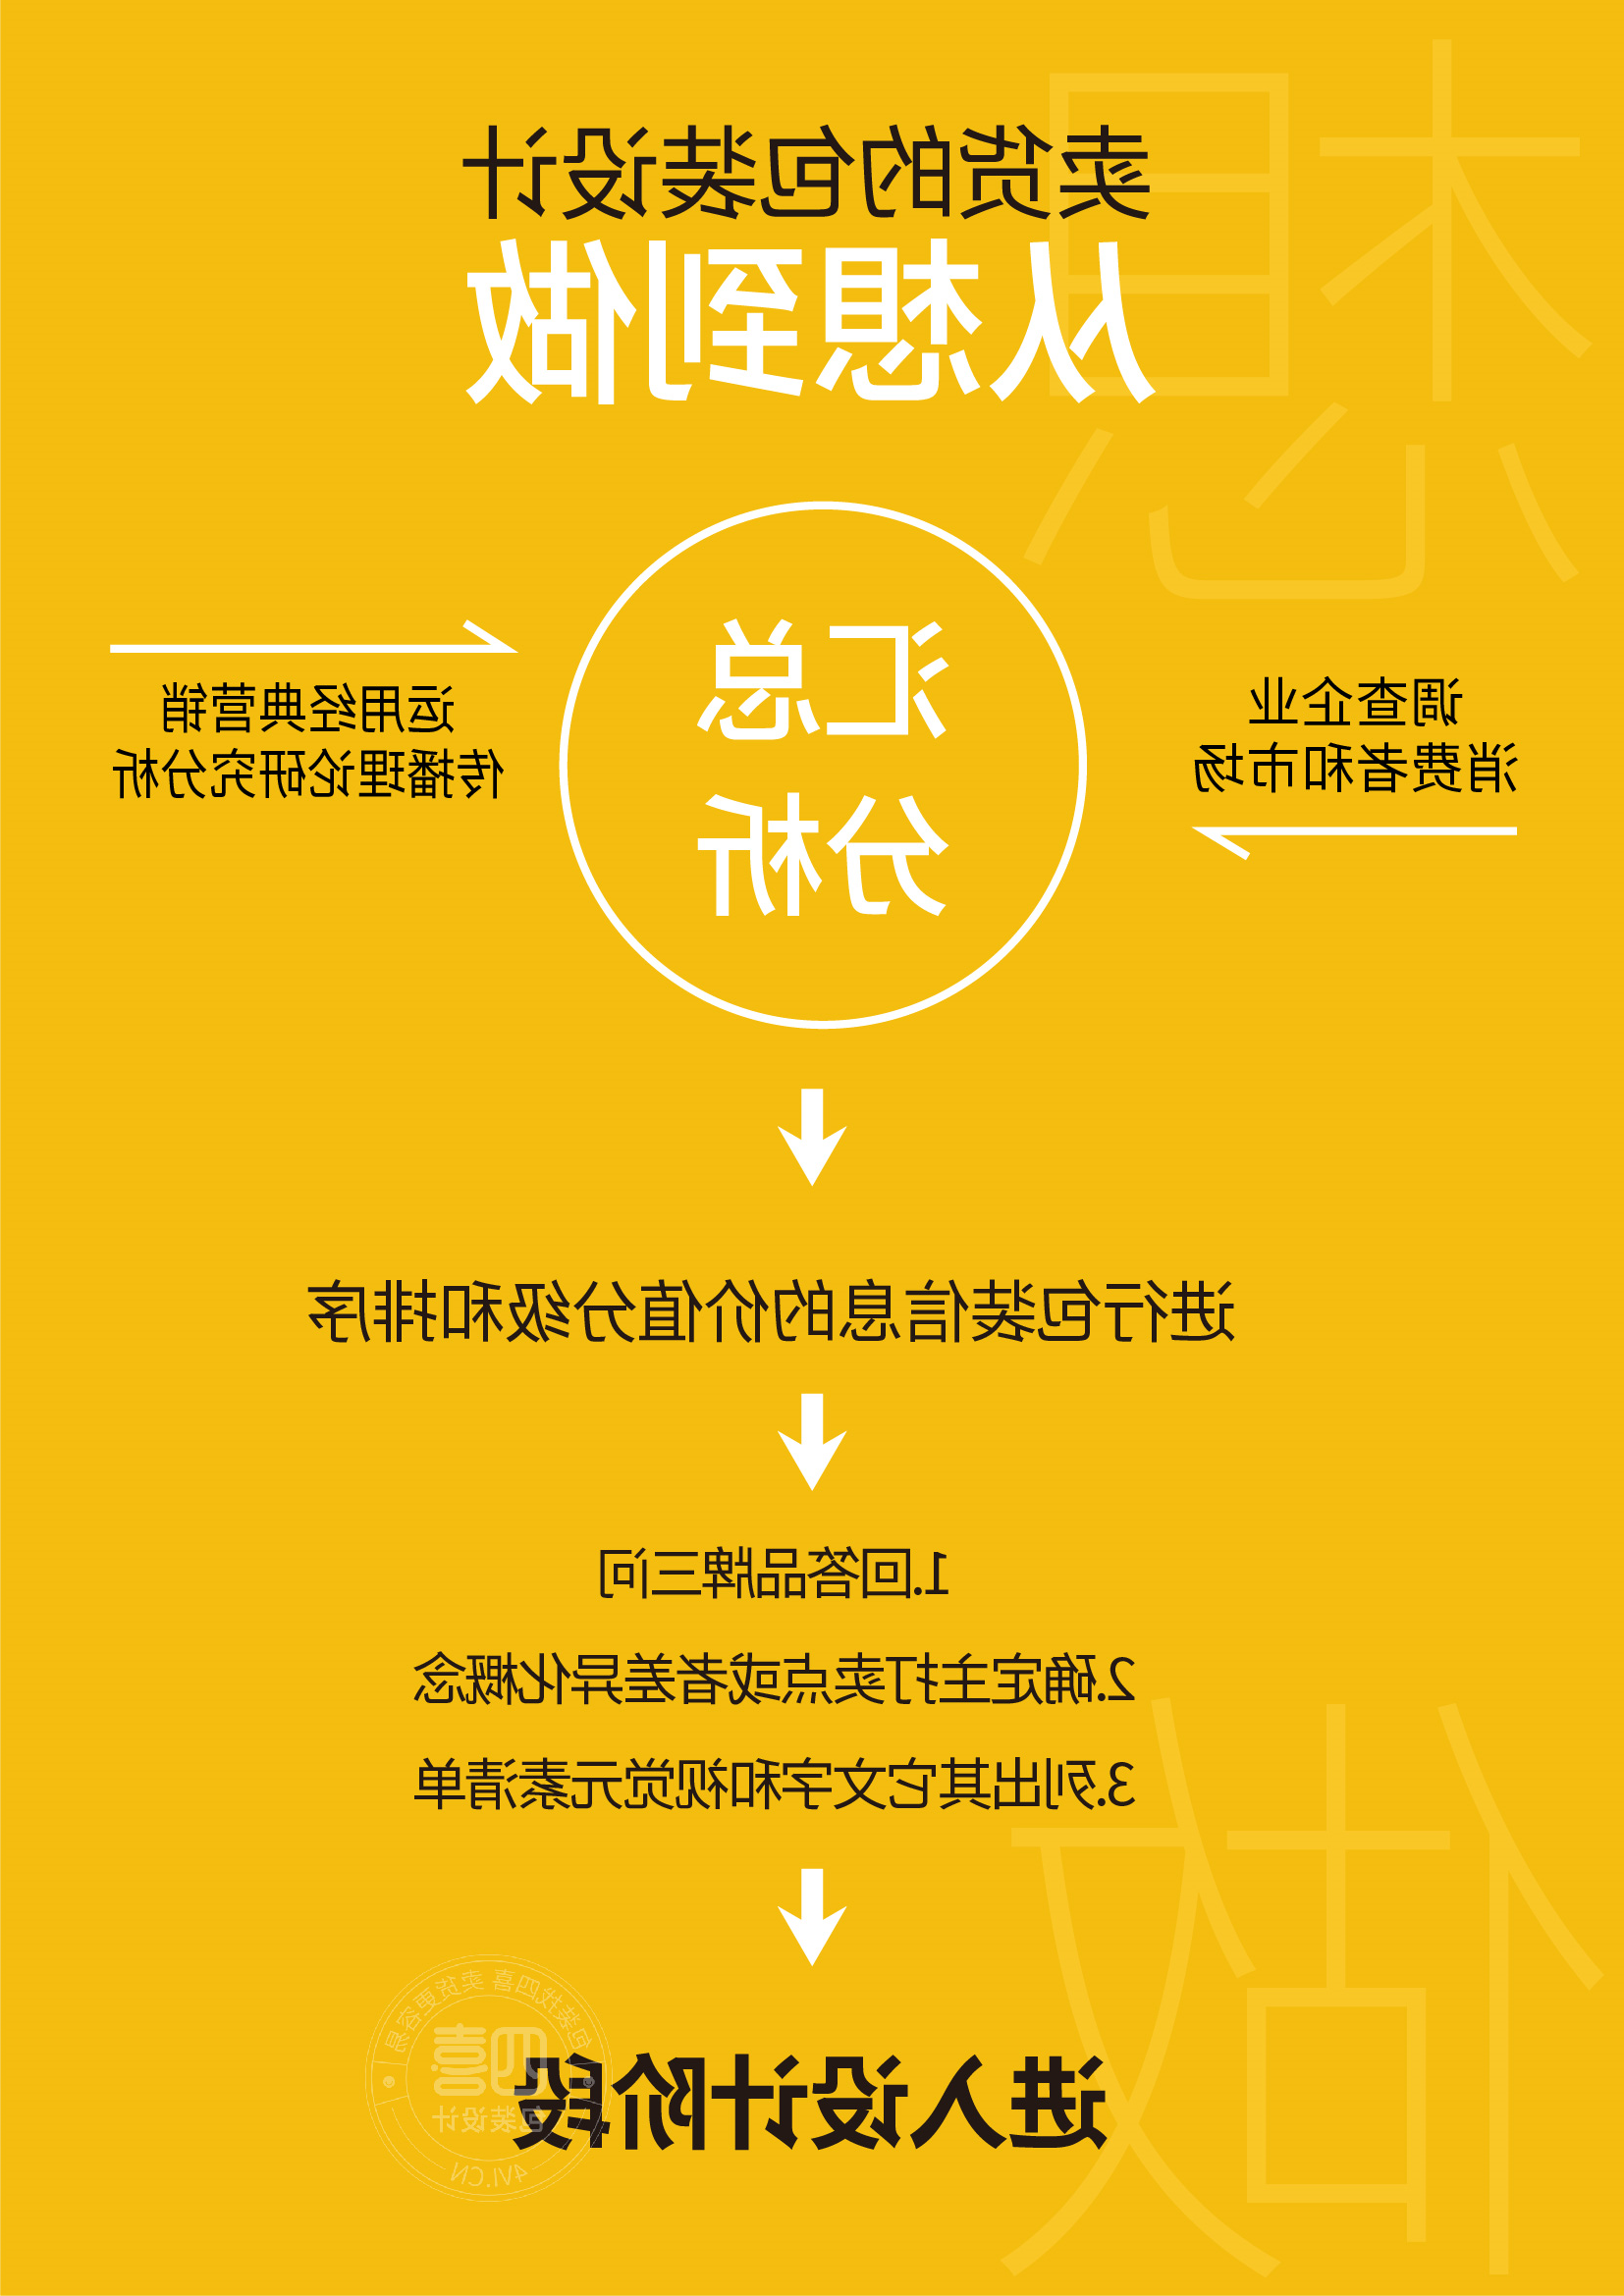 leyu-乐鱼全站app下载(中国)app store
战略包装设计思考工具